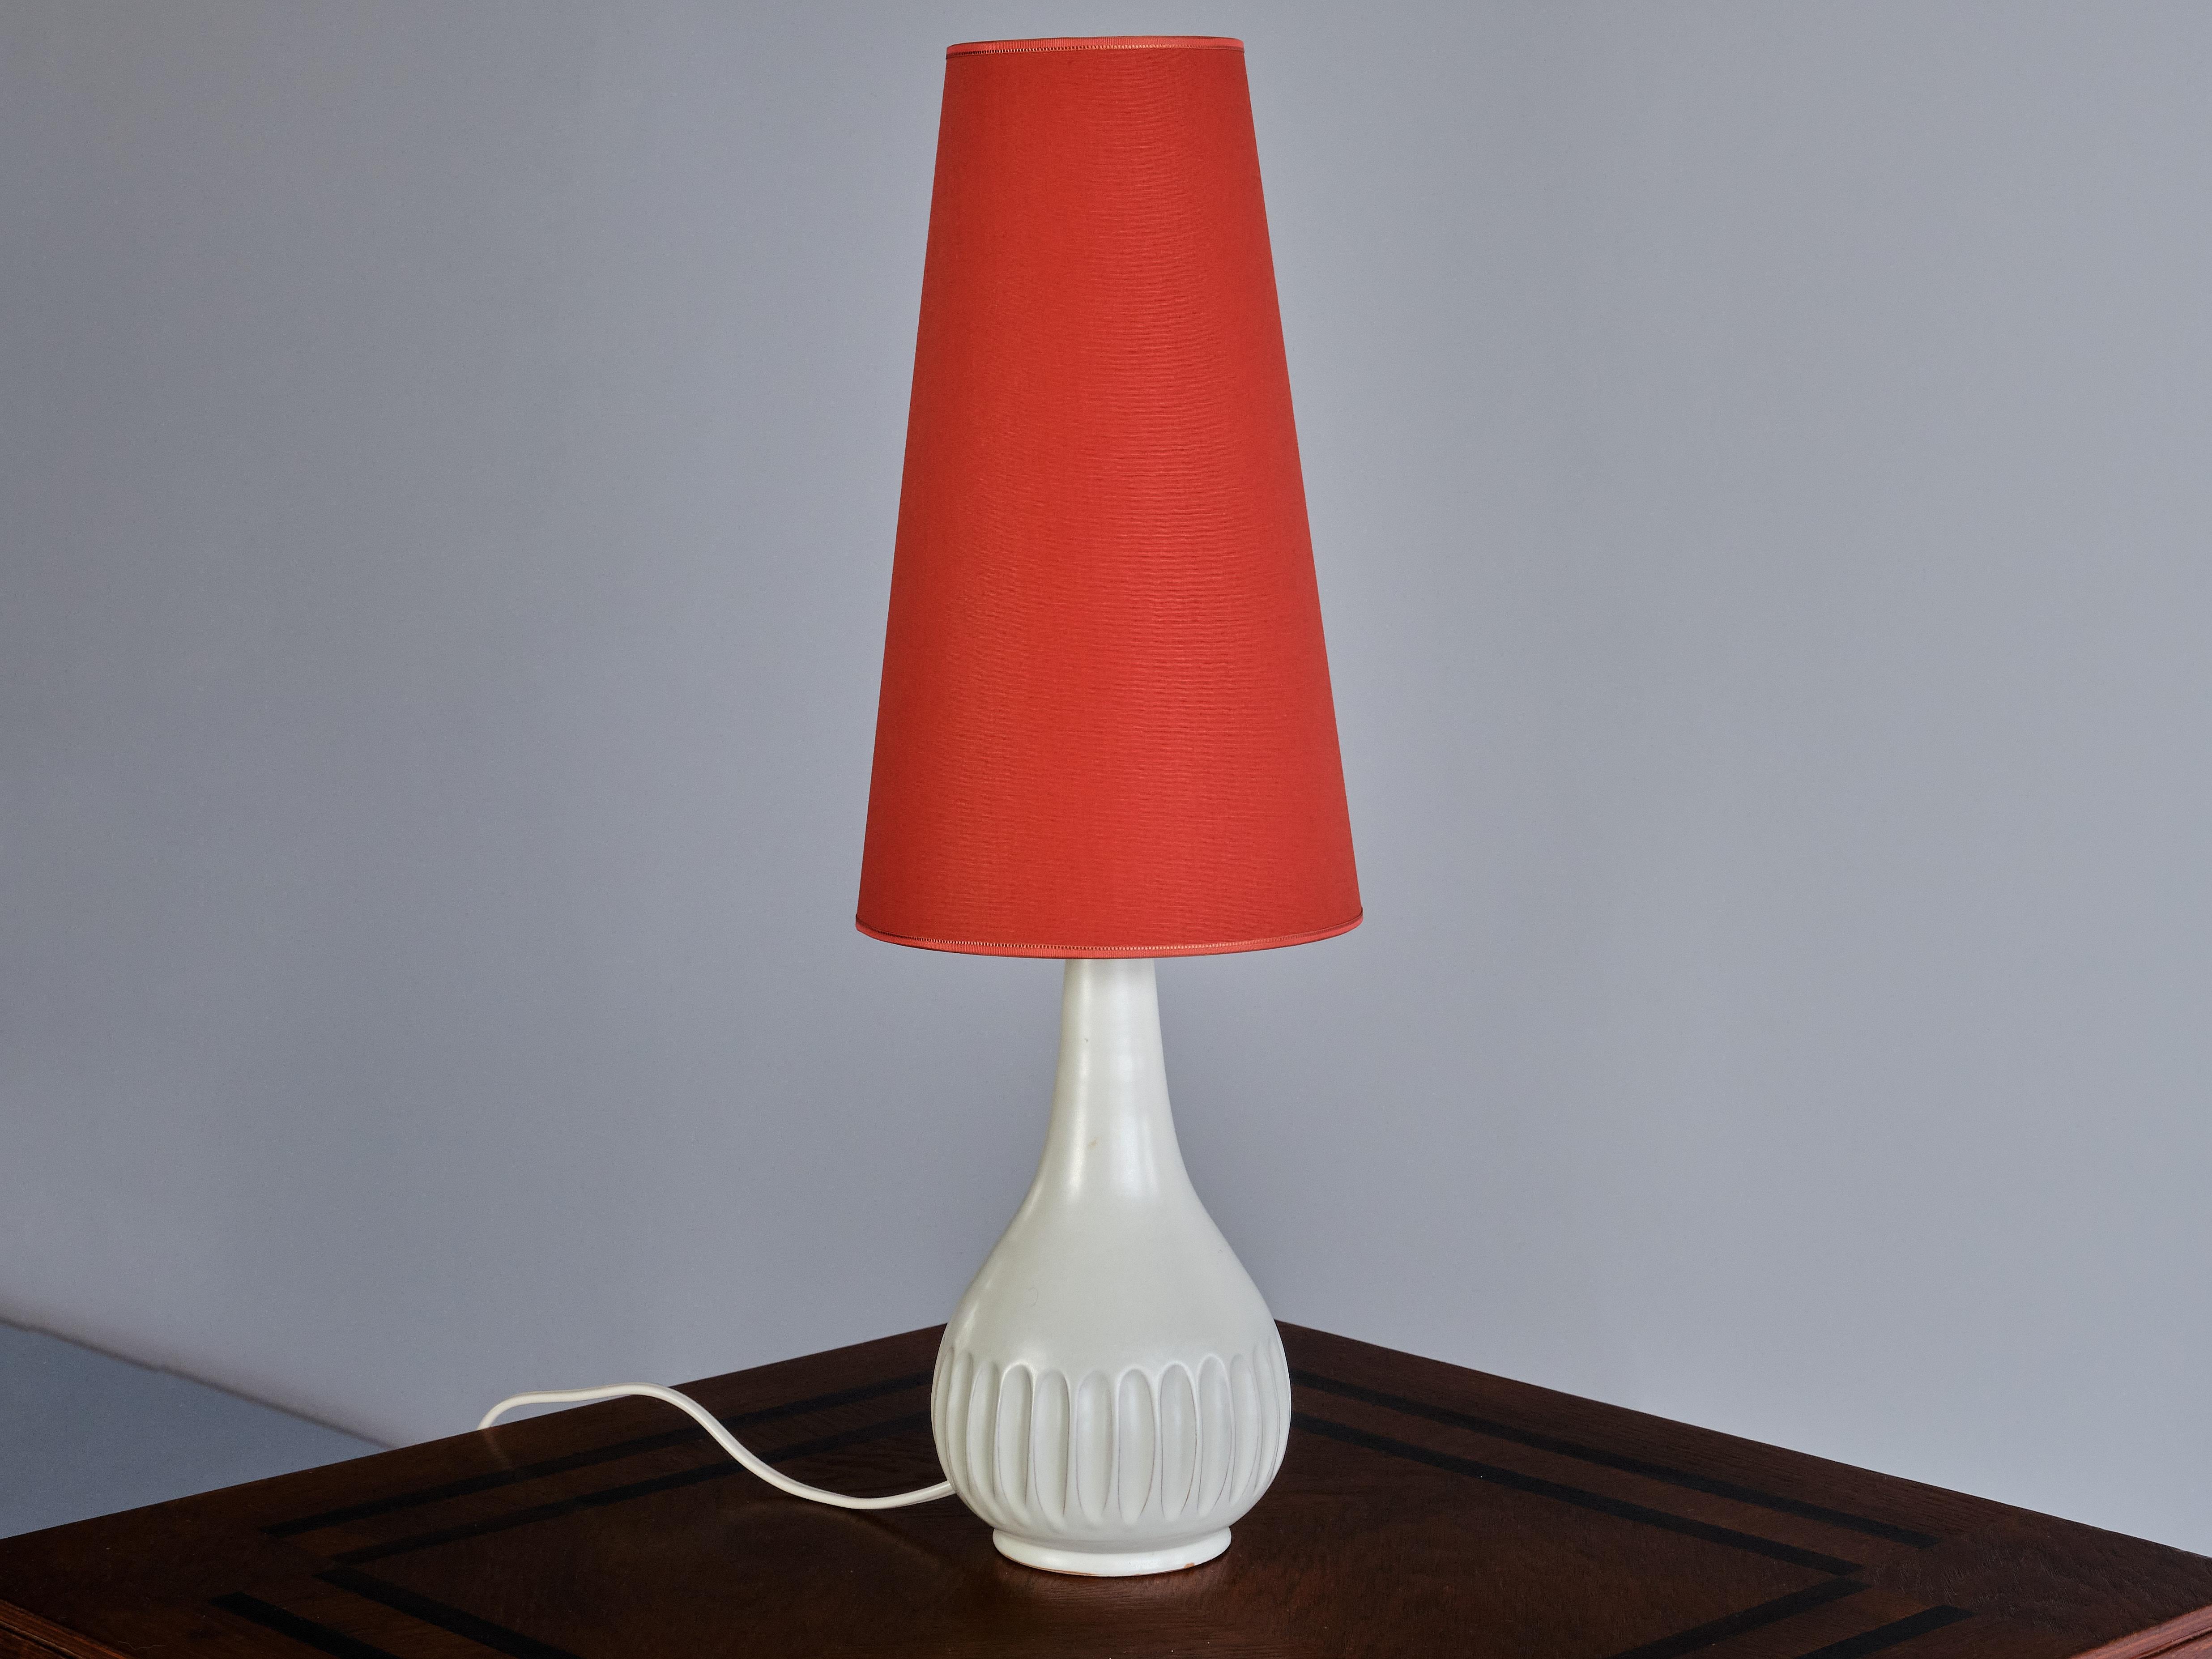 Anna-Lisa Thomson Ceramic Table Lamp, Upsala-Ekeby, Swedish Modern, 1940s For Sale 2